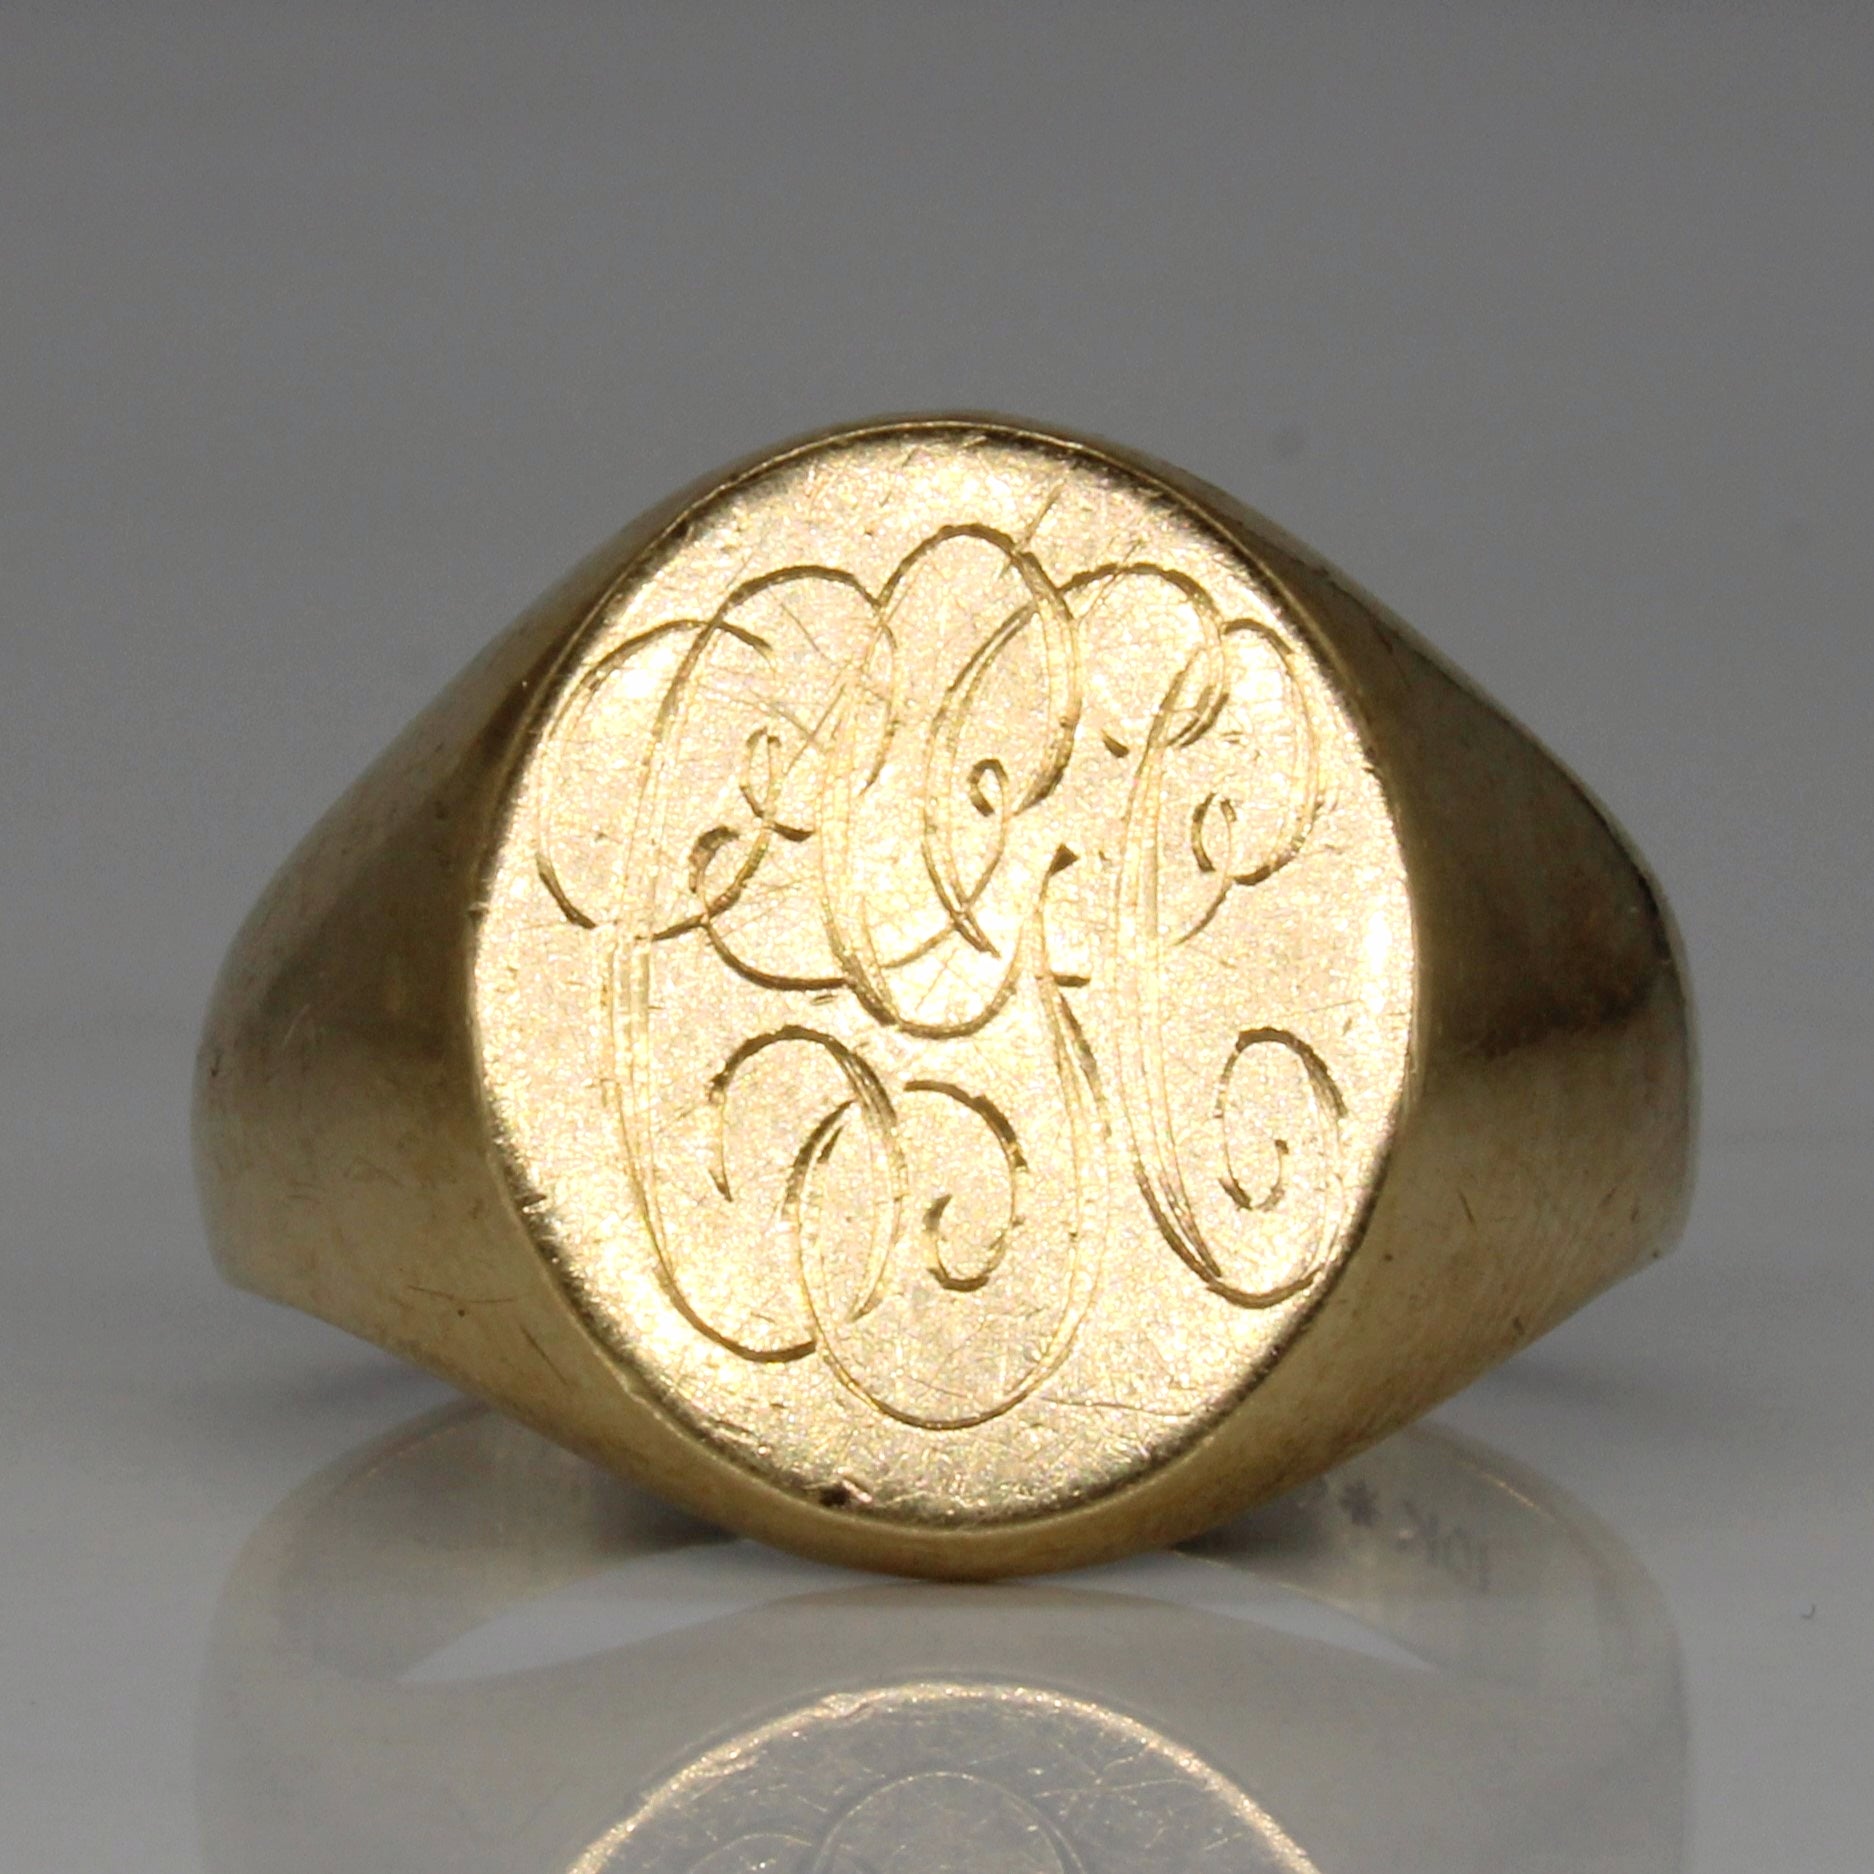 10k Yellow Gold Initial Ring | SZ 9.25 |